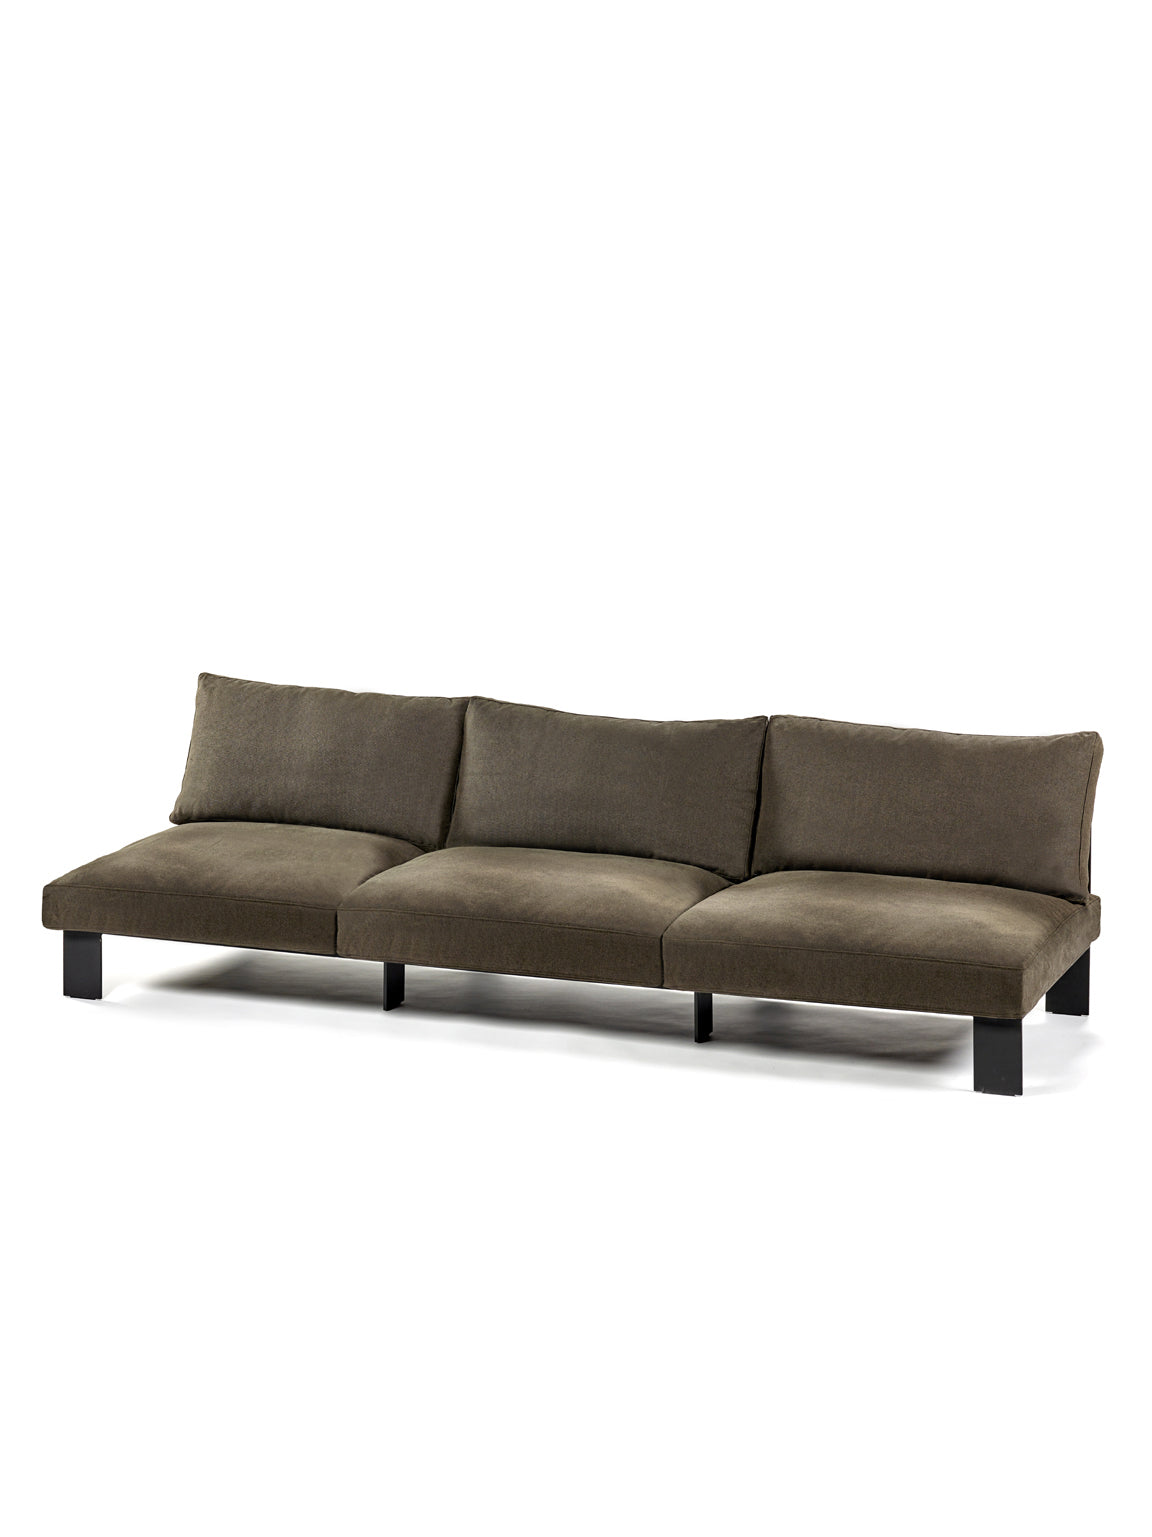 Mombaers Sofa - Sepia - THAT COOL LIVING